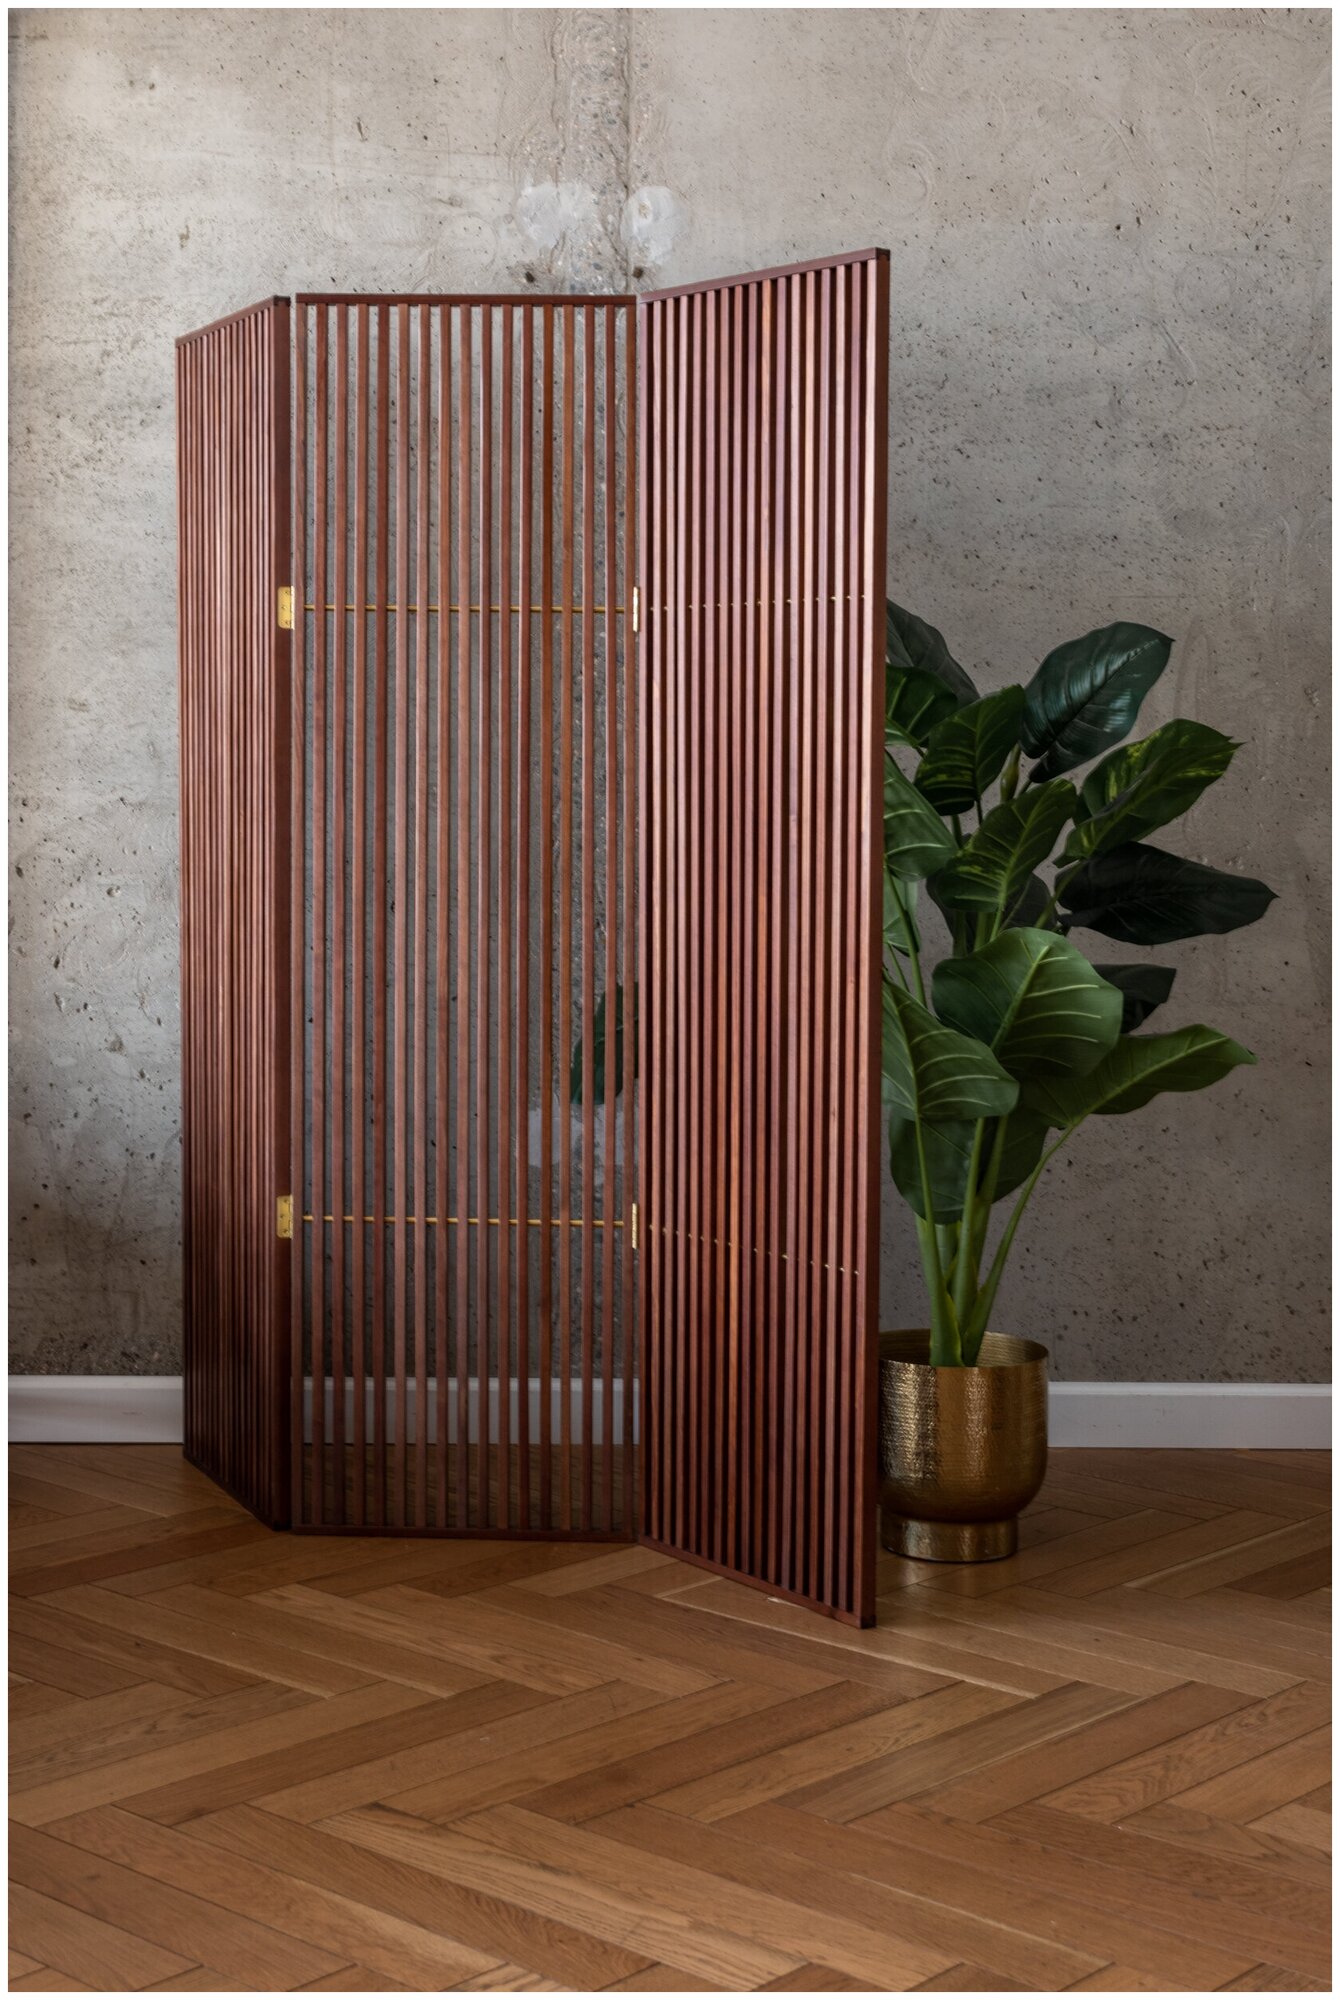 Ширма Arfa 01 декоративная деревянная 150х180 см, складная, цвет венге, Varman.pro